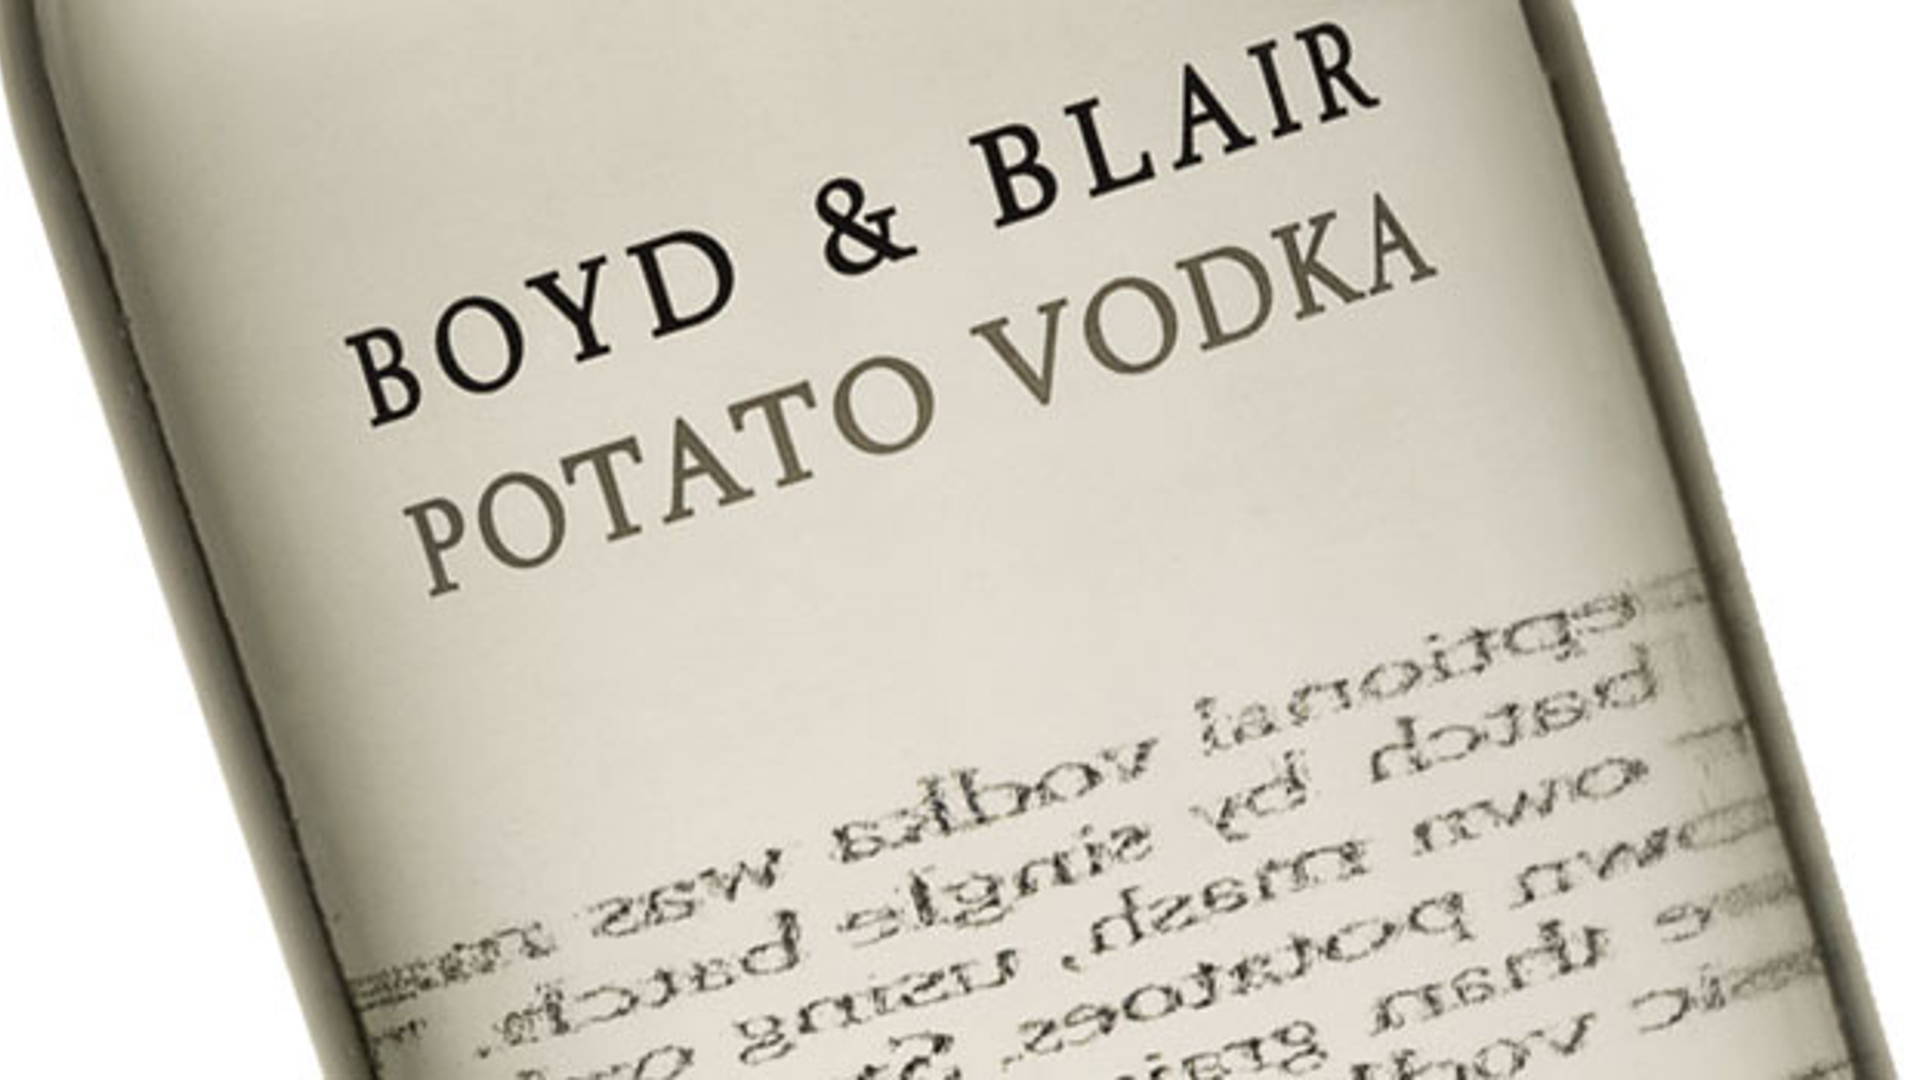 Featured image for Boyd & Blair Potato Vodka